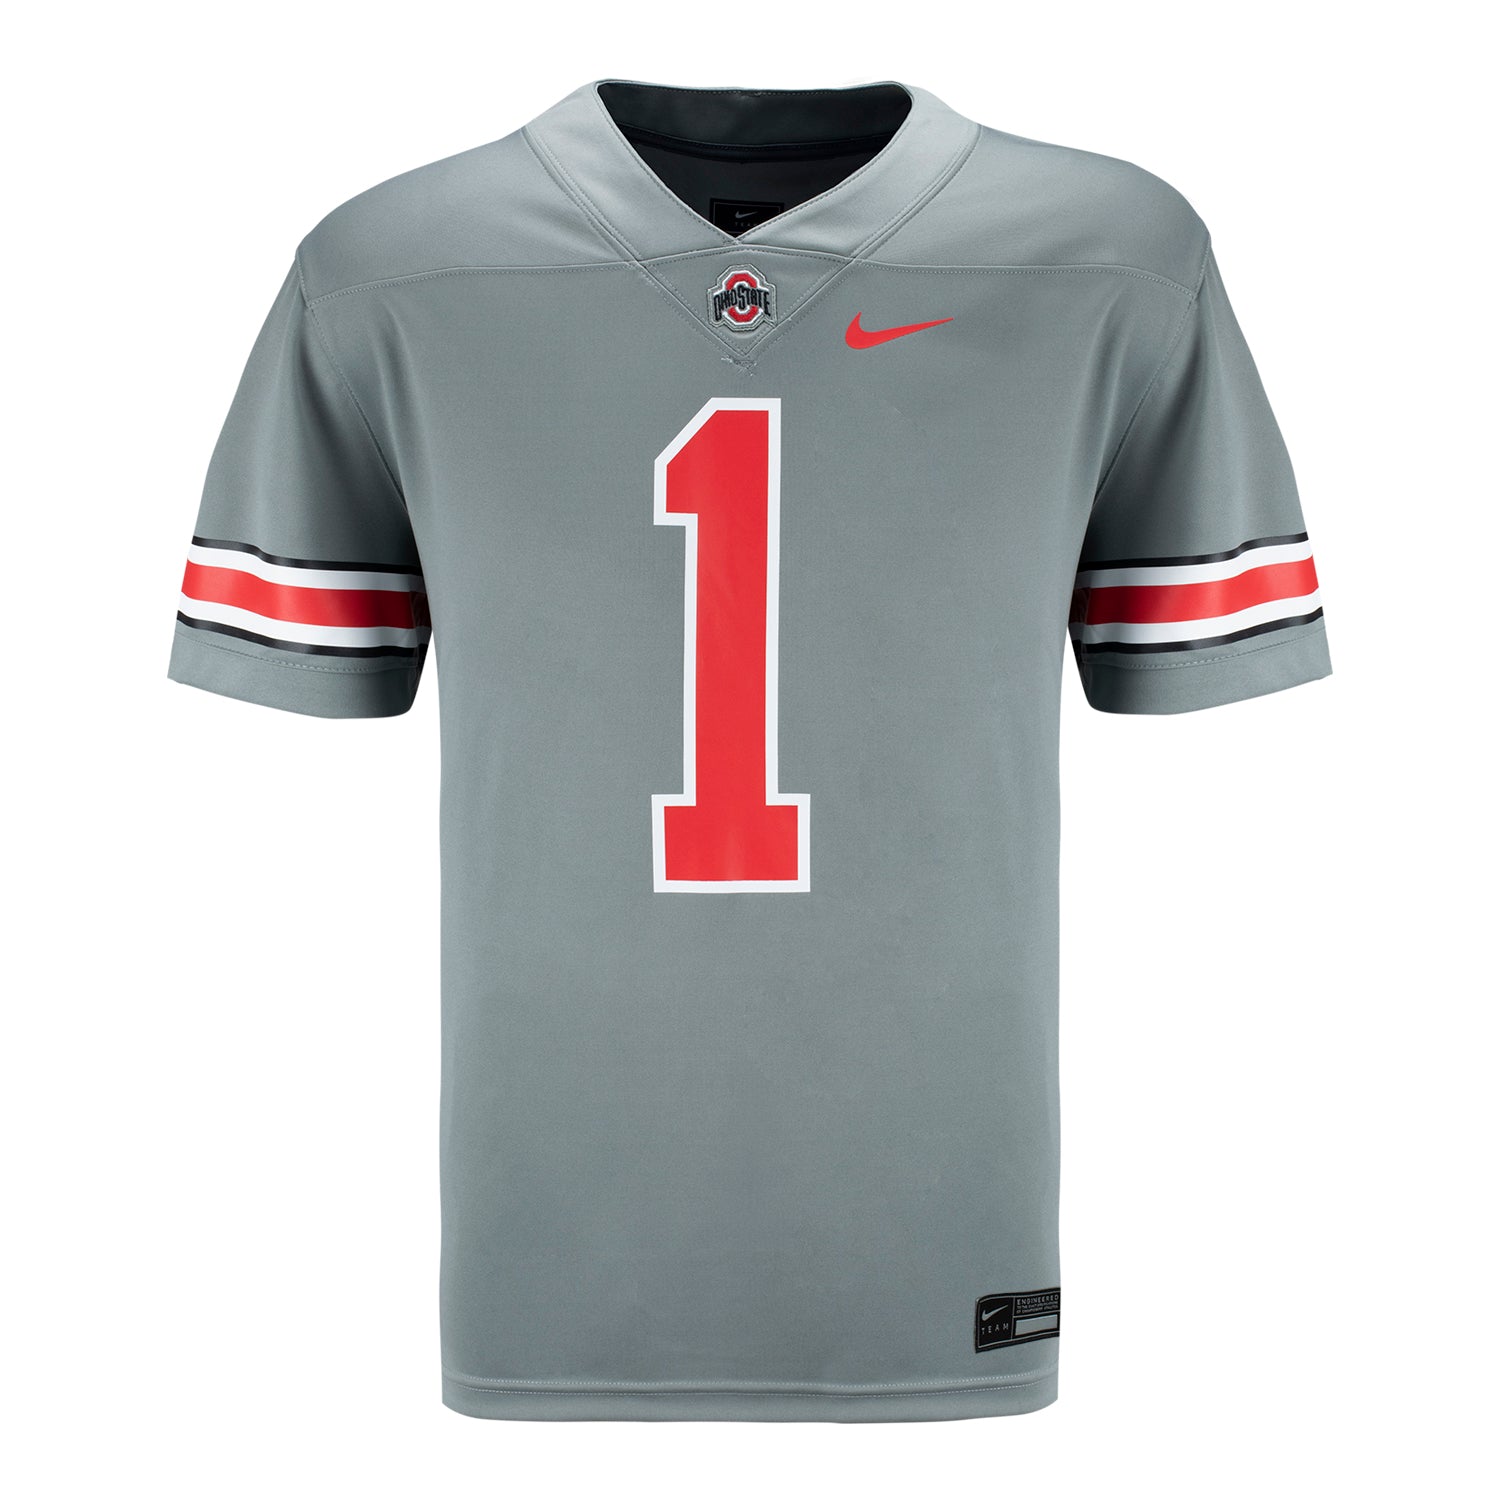 Men's Nike #1 Crimson Alabama Tide Football Game Jersey Size: Extra Large